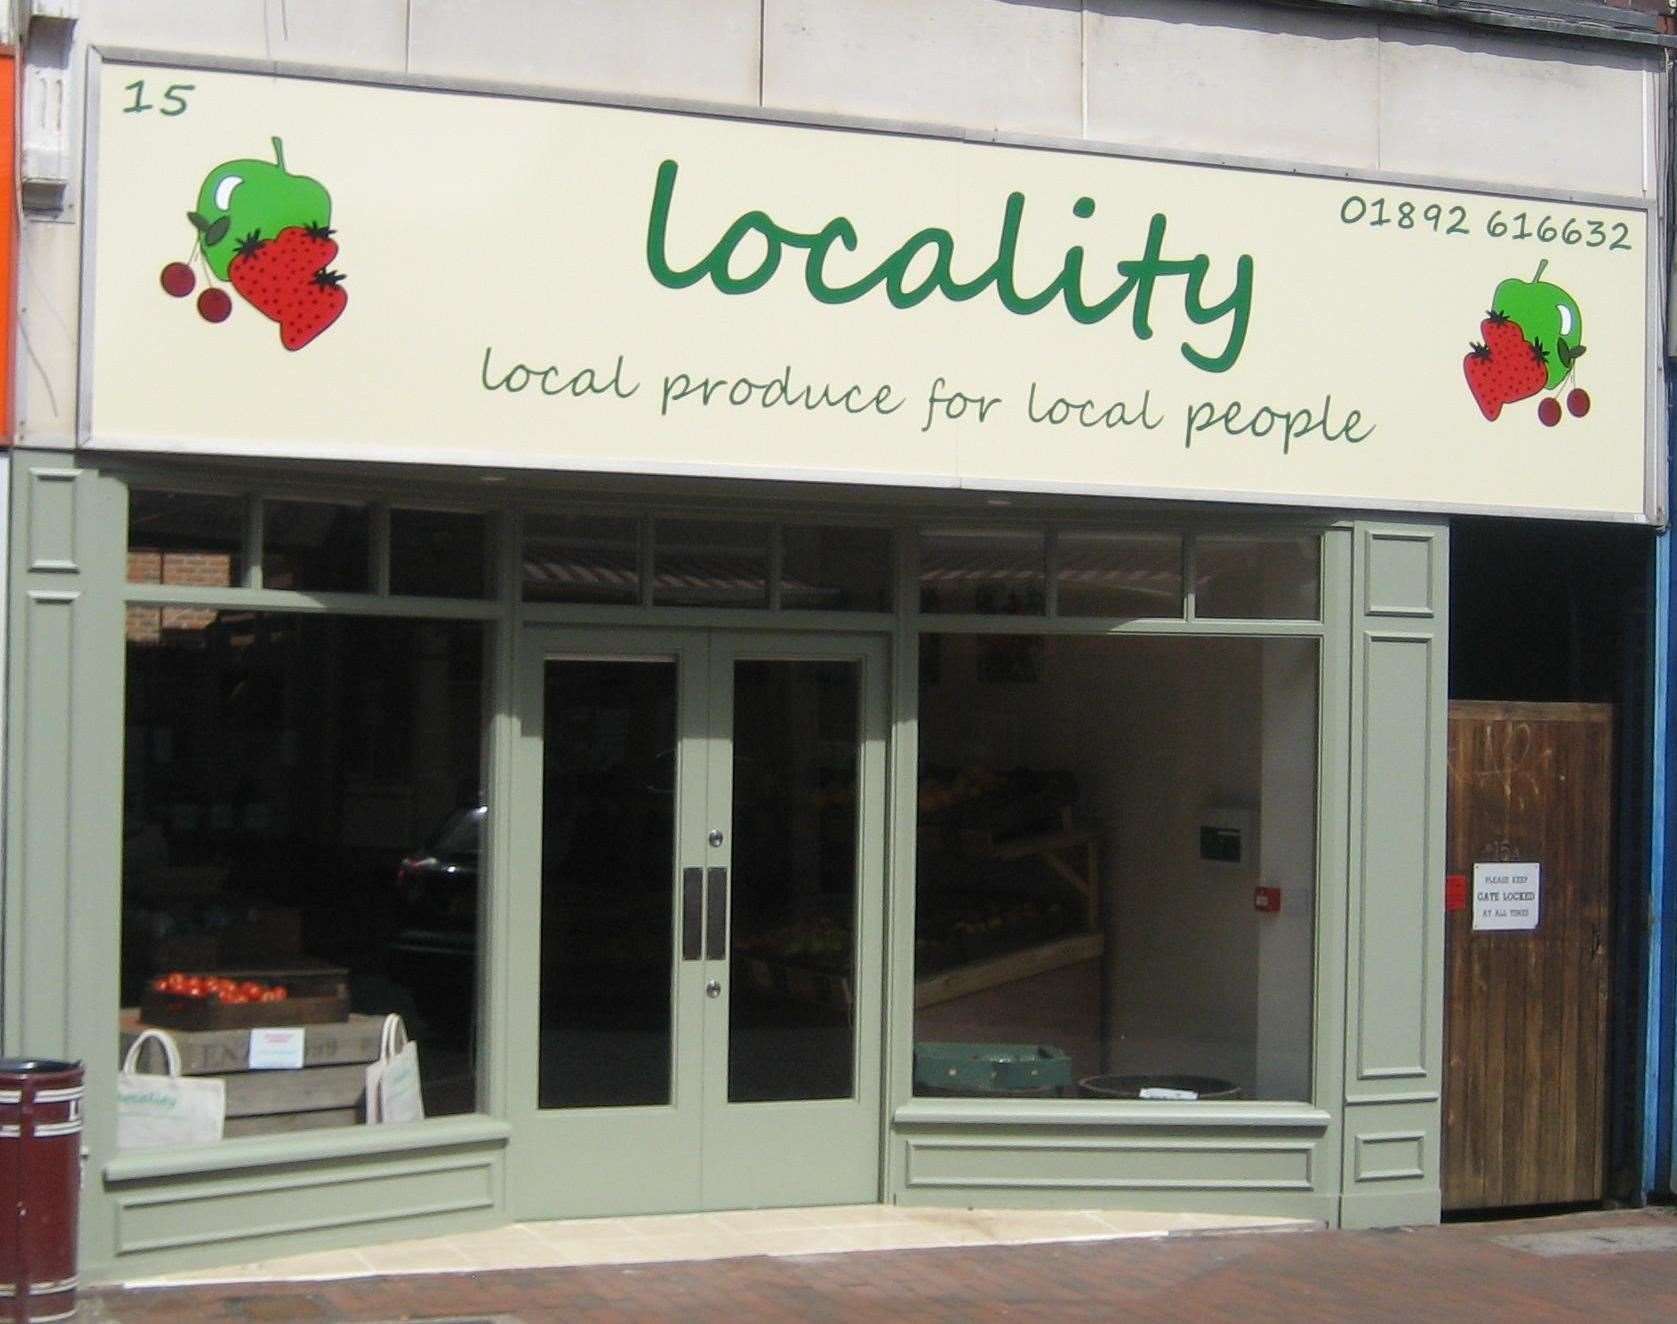 Locality Greengrocers in Tunbridge Wells